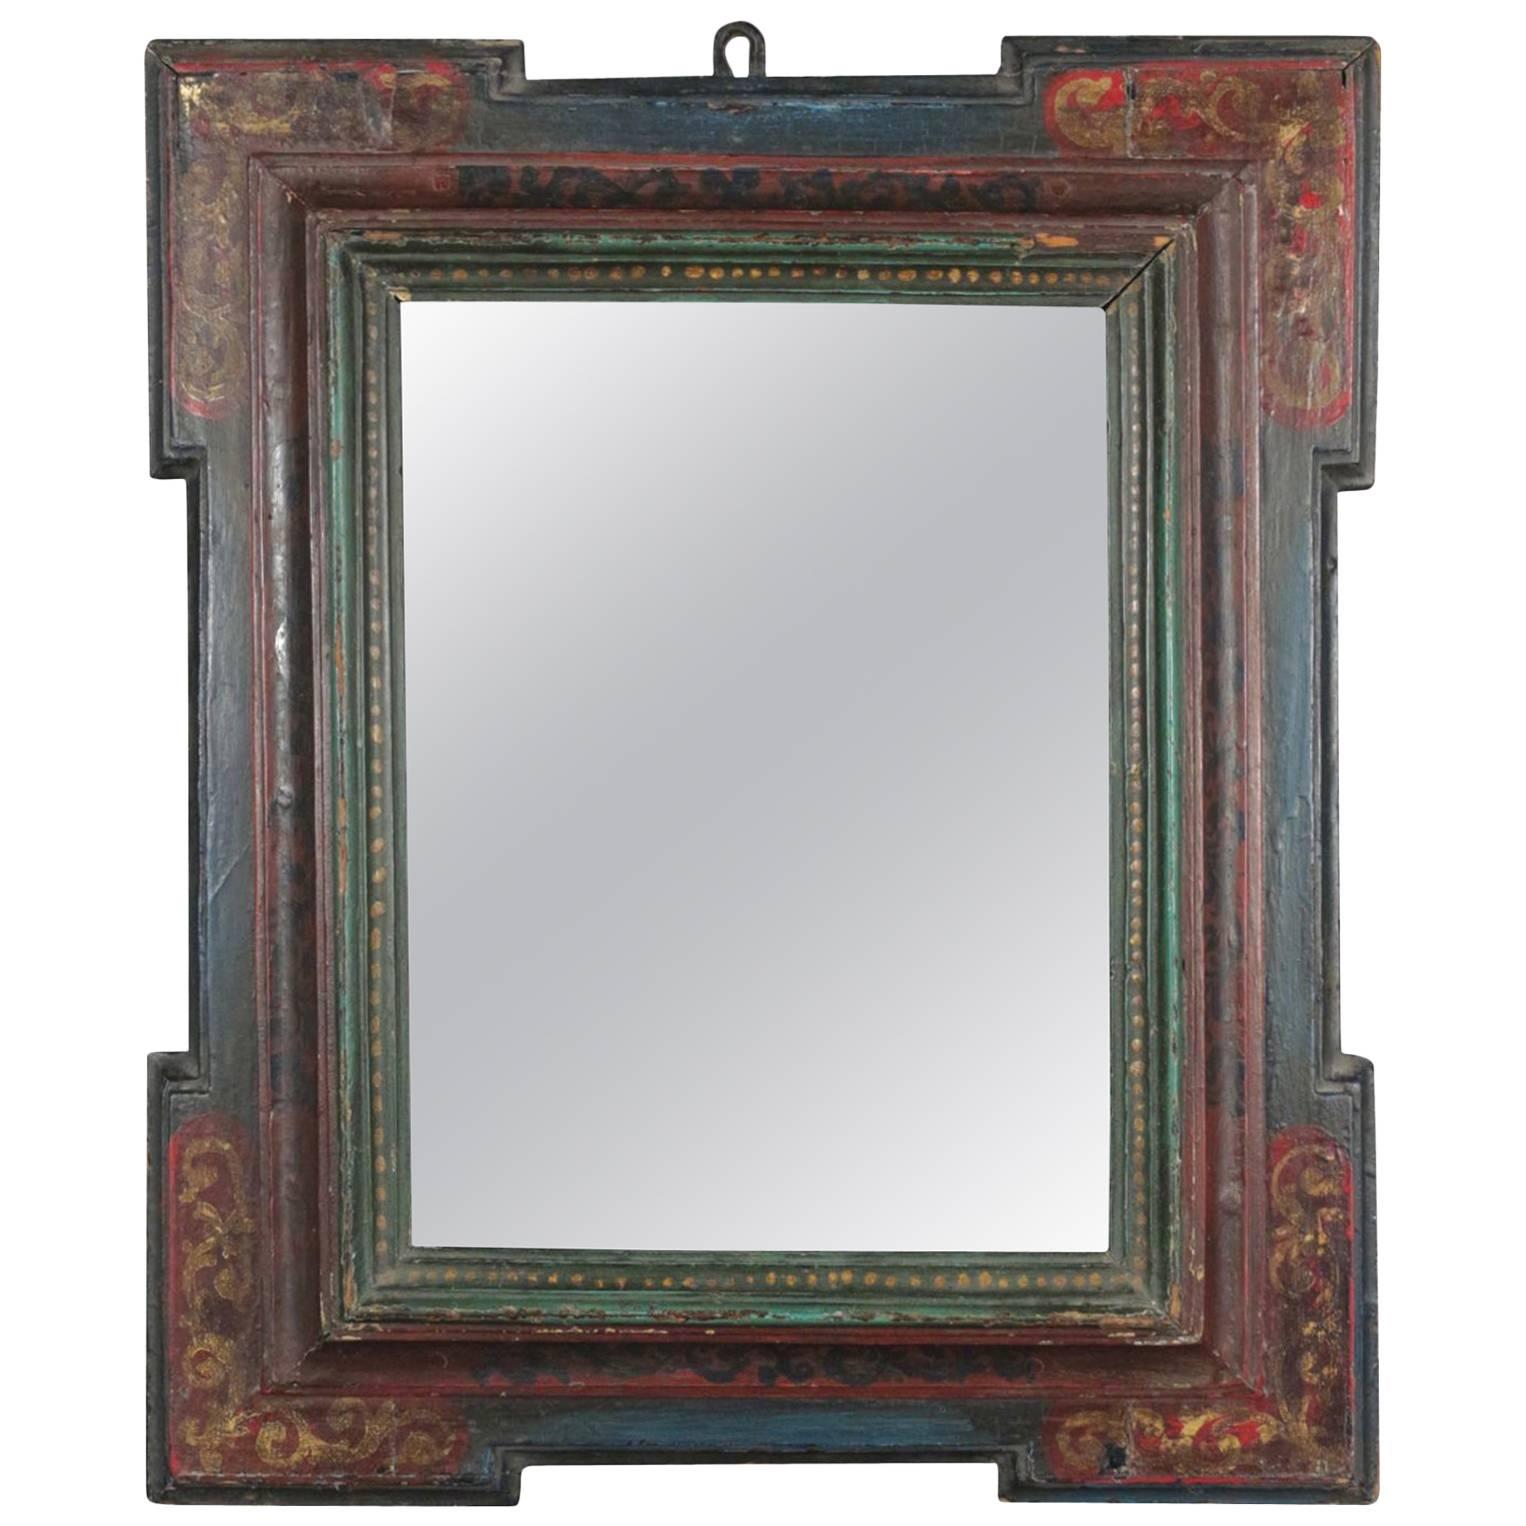 Beautiful Spanish Renaissance Frame Mounted as Mirror, 16th-17th Century